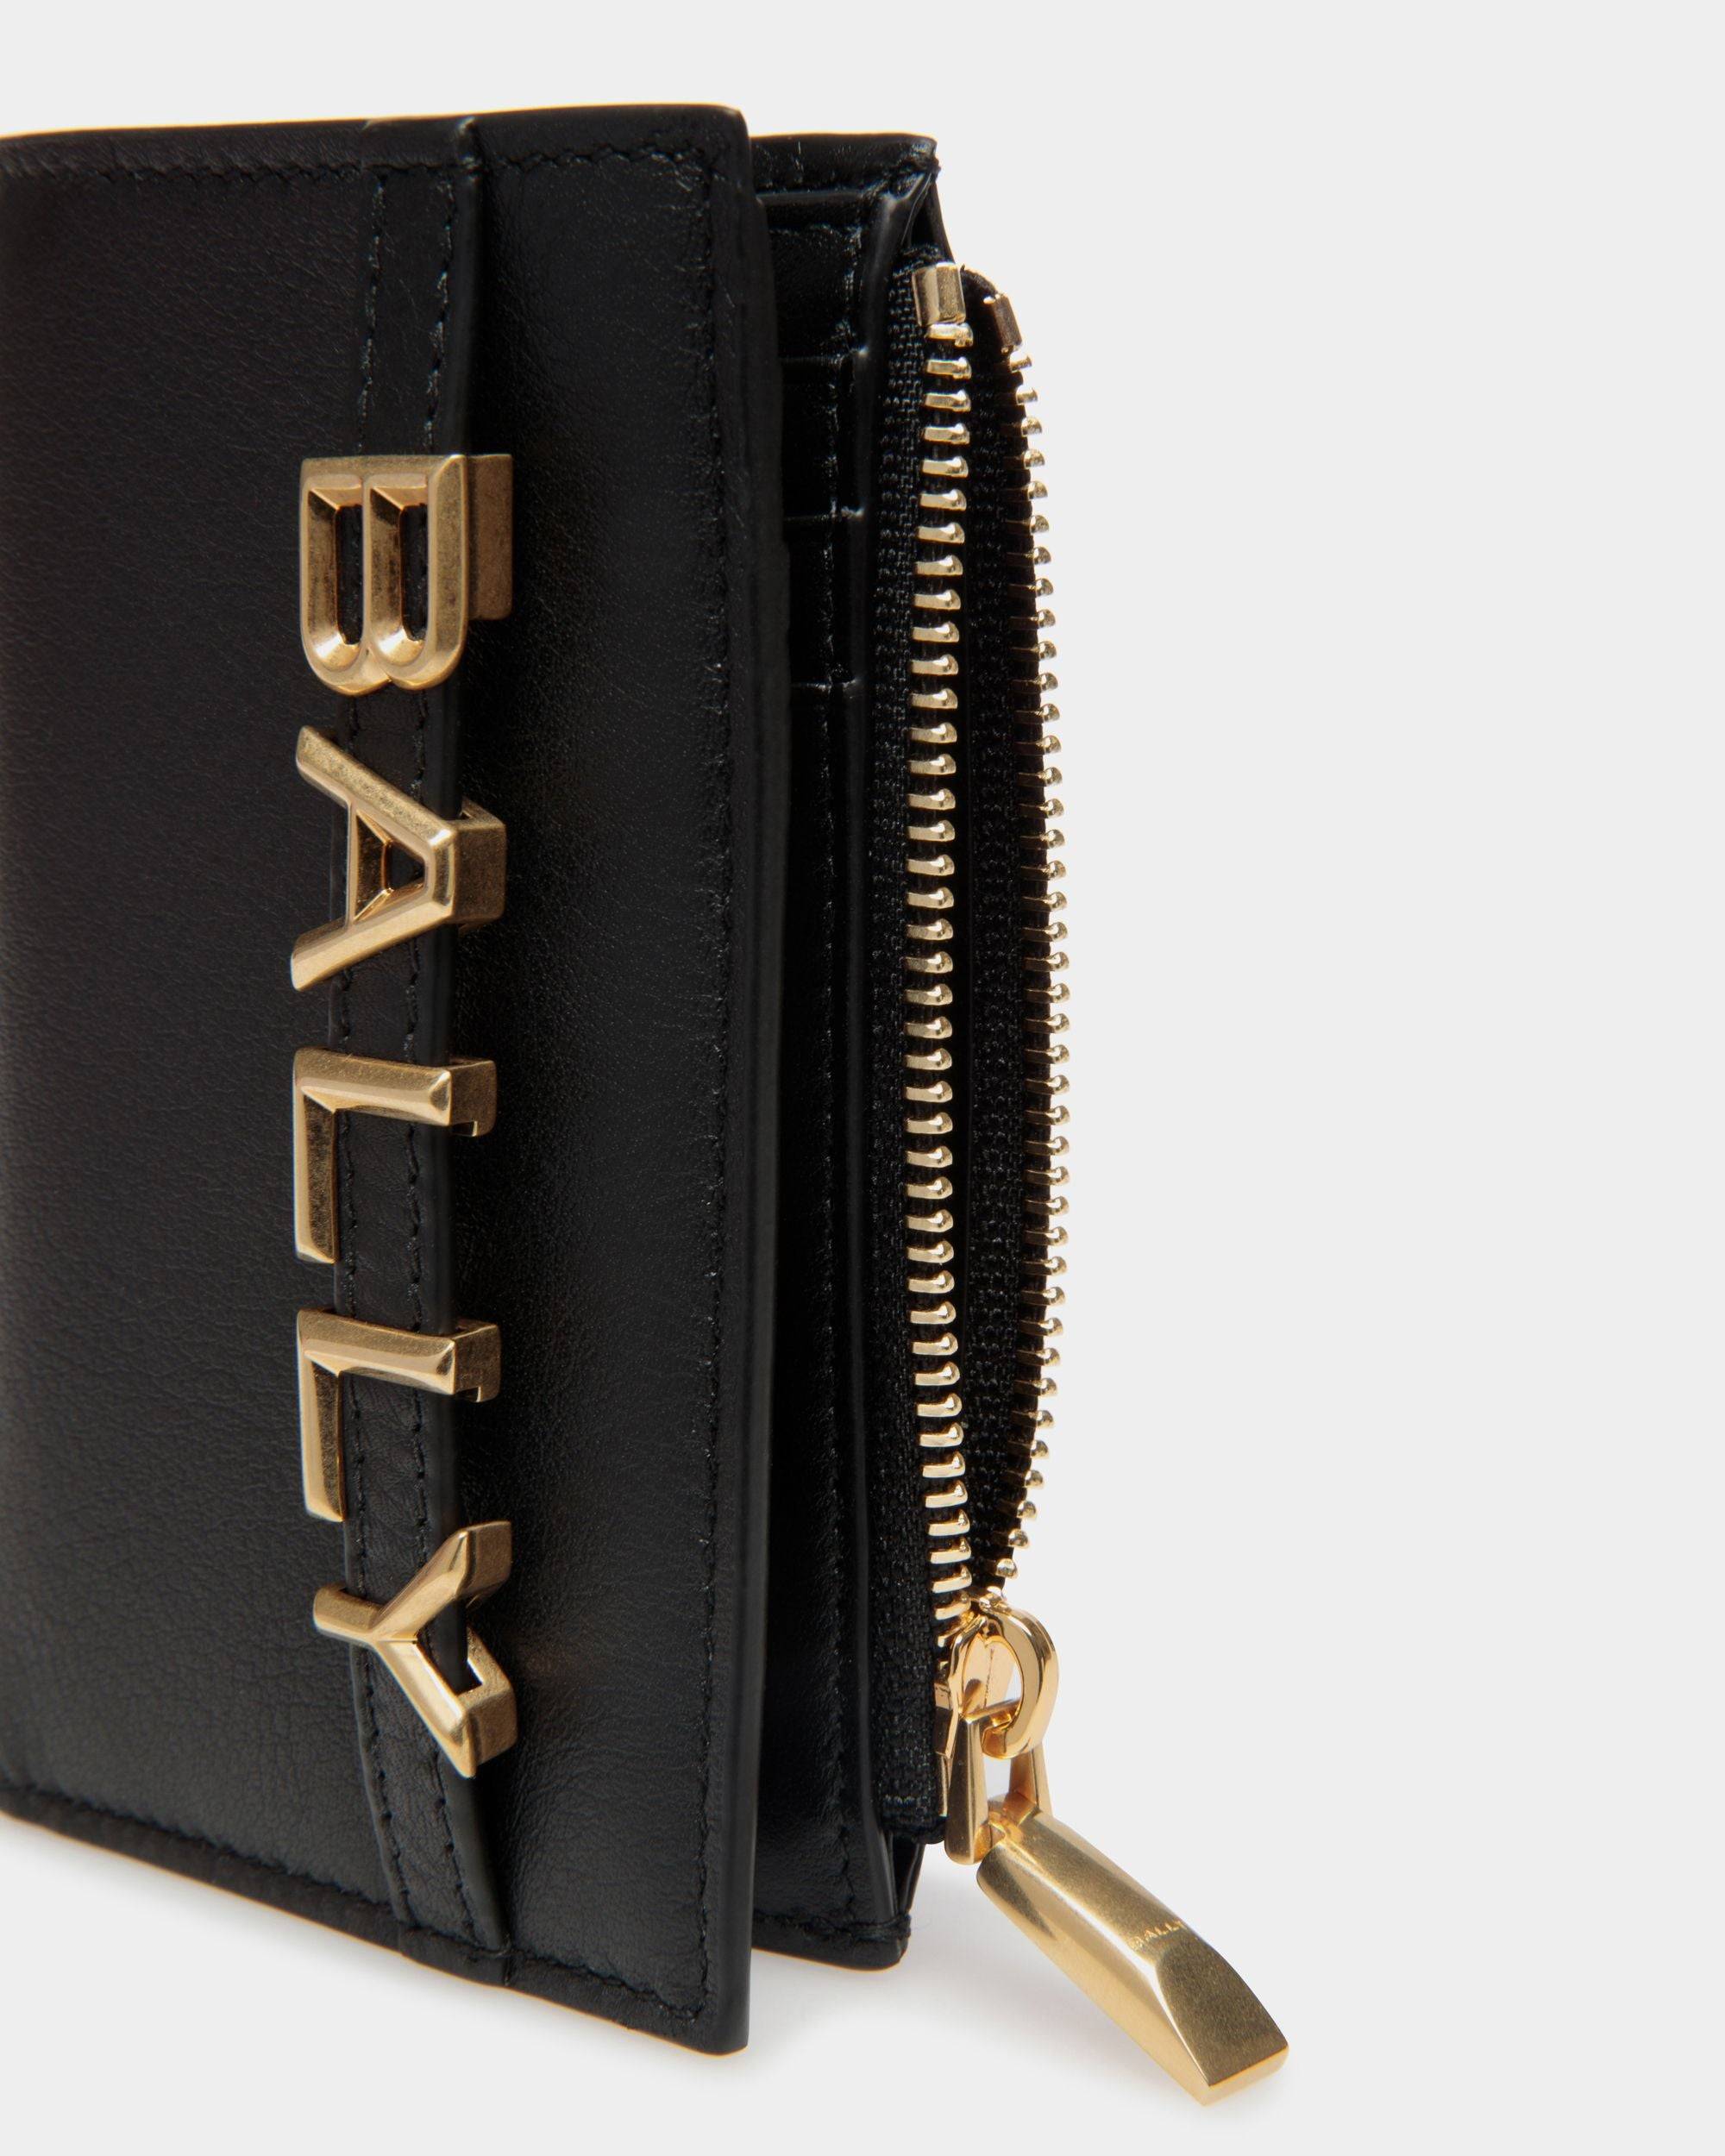 Bally Spell | Women's Wallet in Black Leather | Bally | Still Life Detail